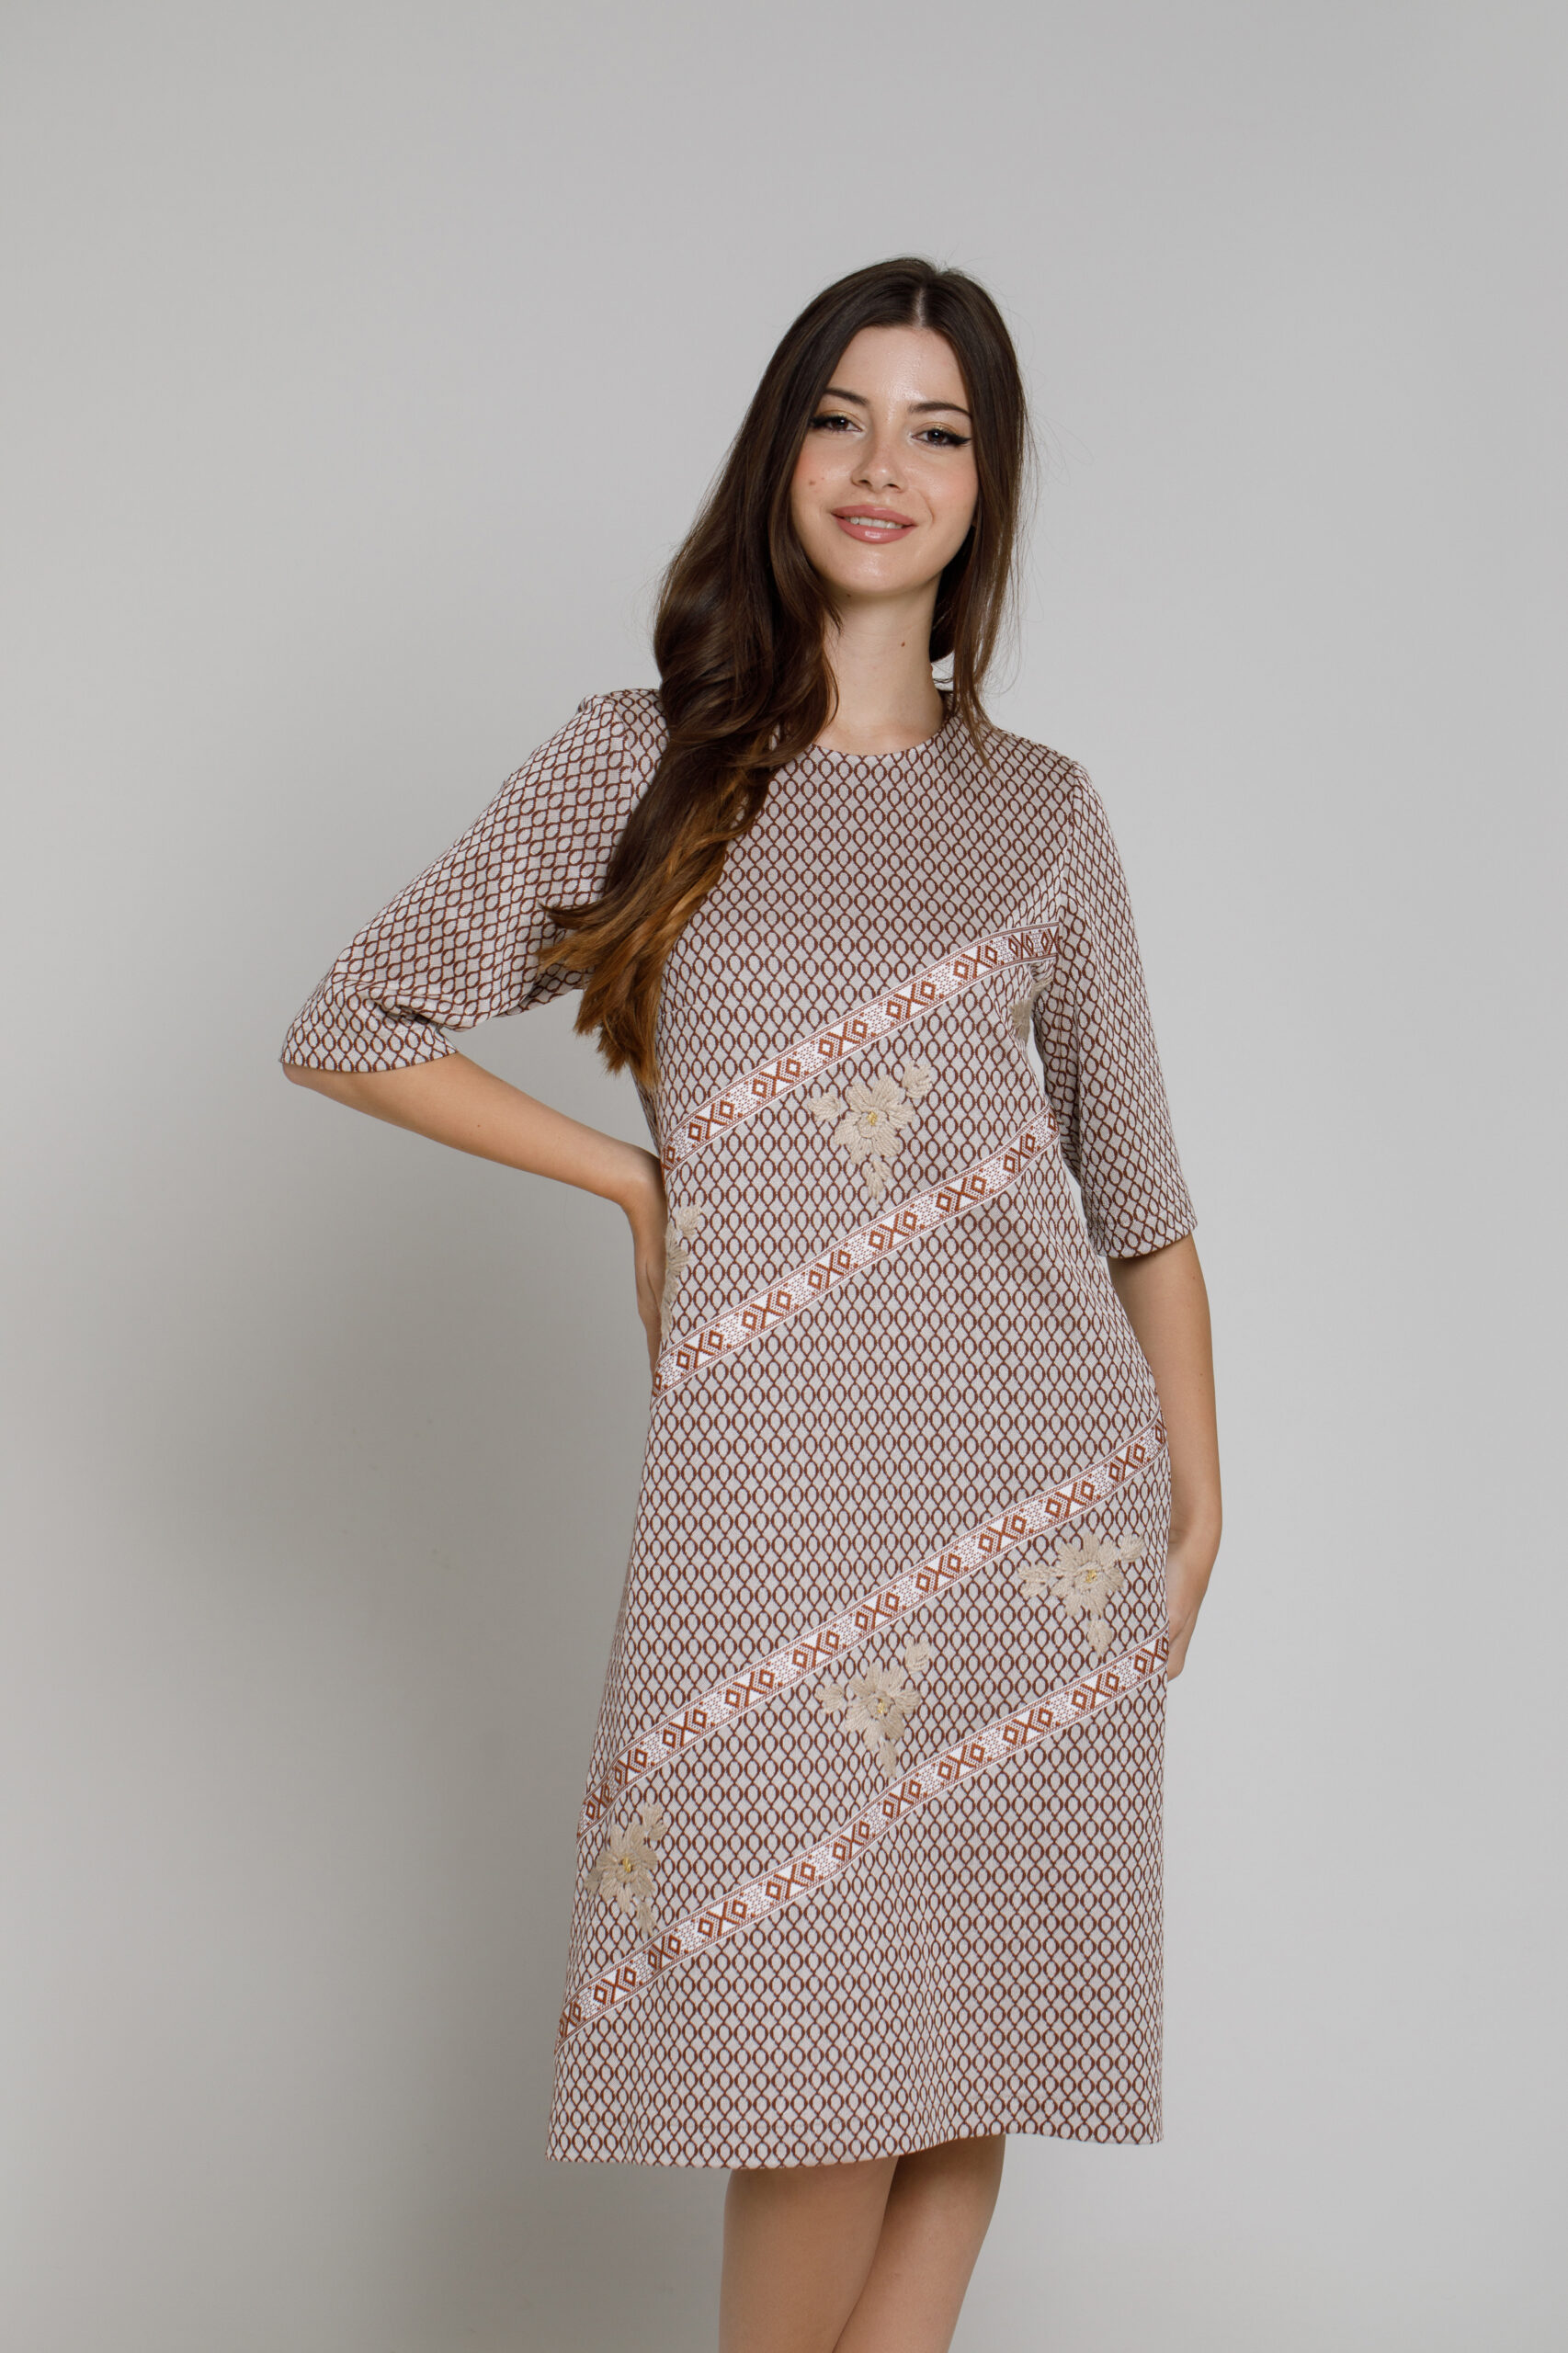 ARELLA BEIGE dress with geometric print. Natural fabrics, original design, handmade embroidery